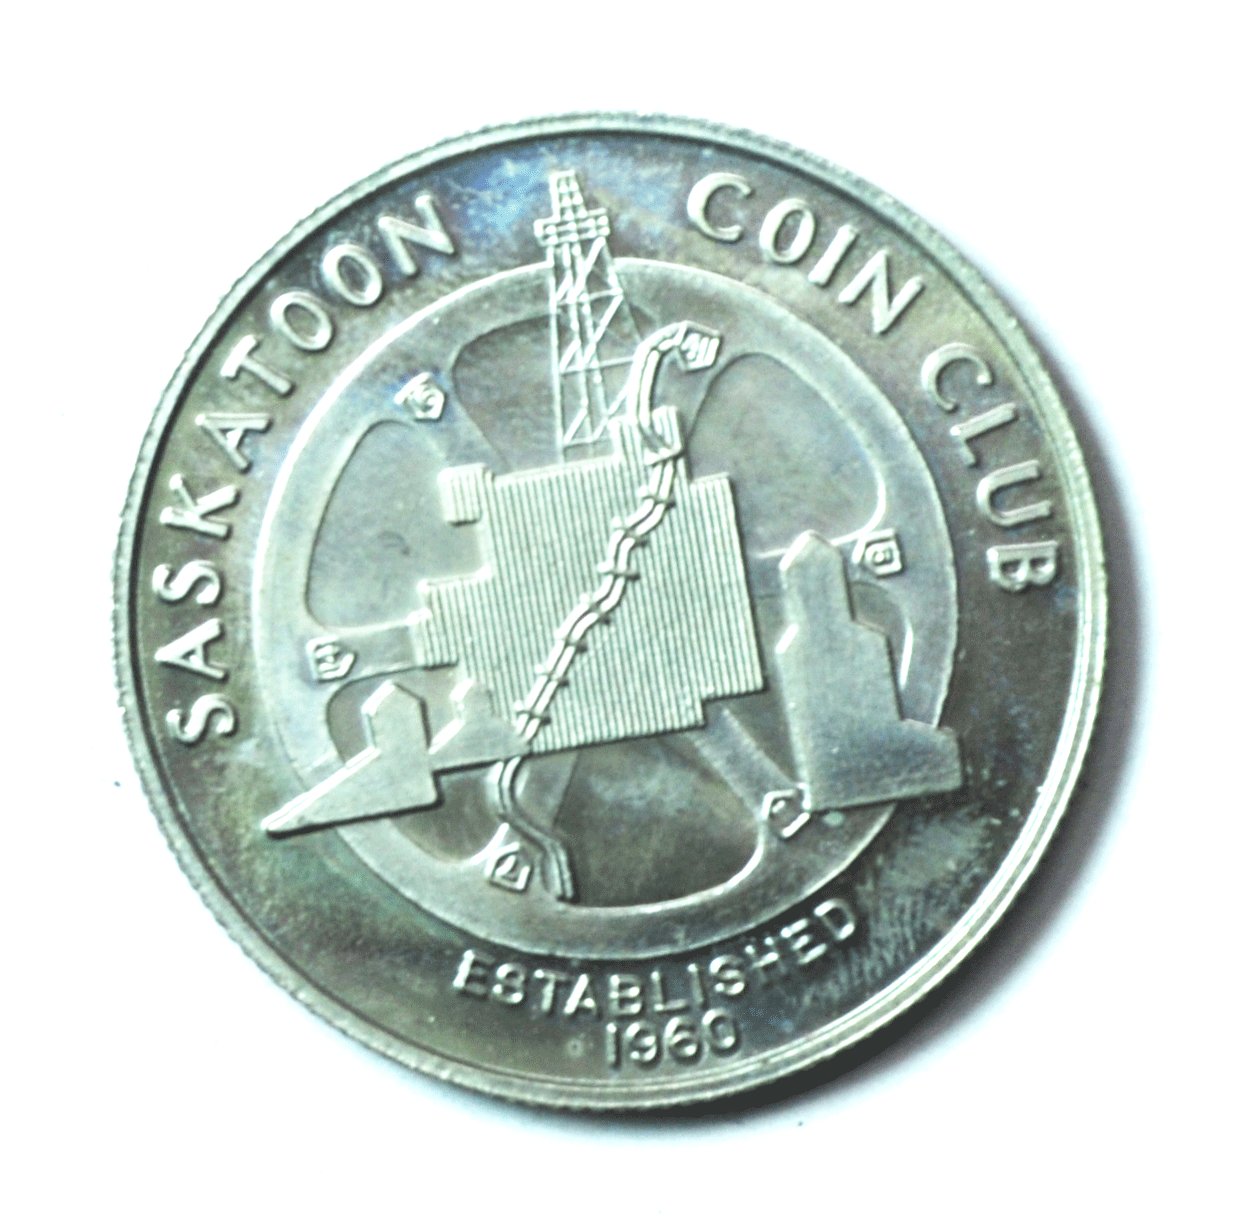 1986 $2 Saskatoon Coin Club 25th Anniversary Medal 38mm Stamp Show